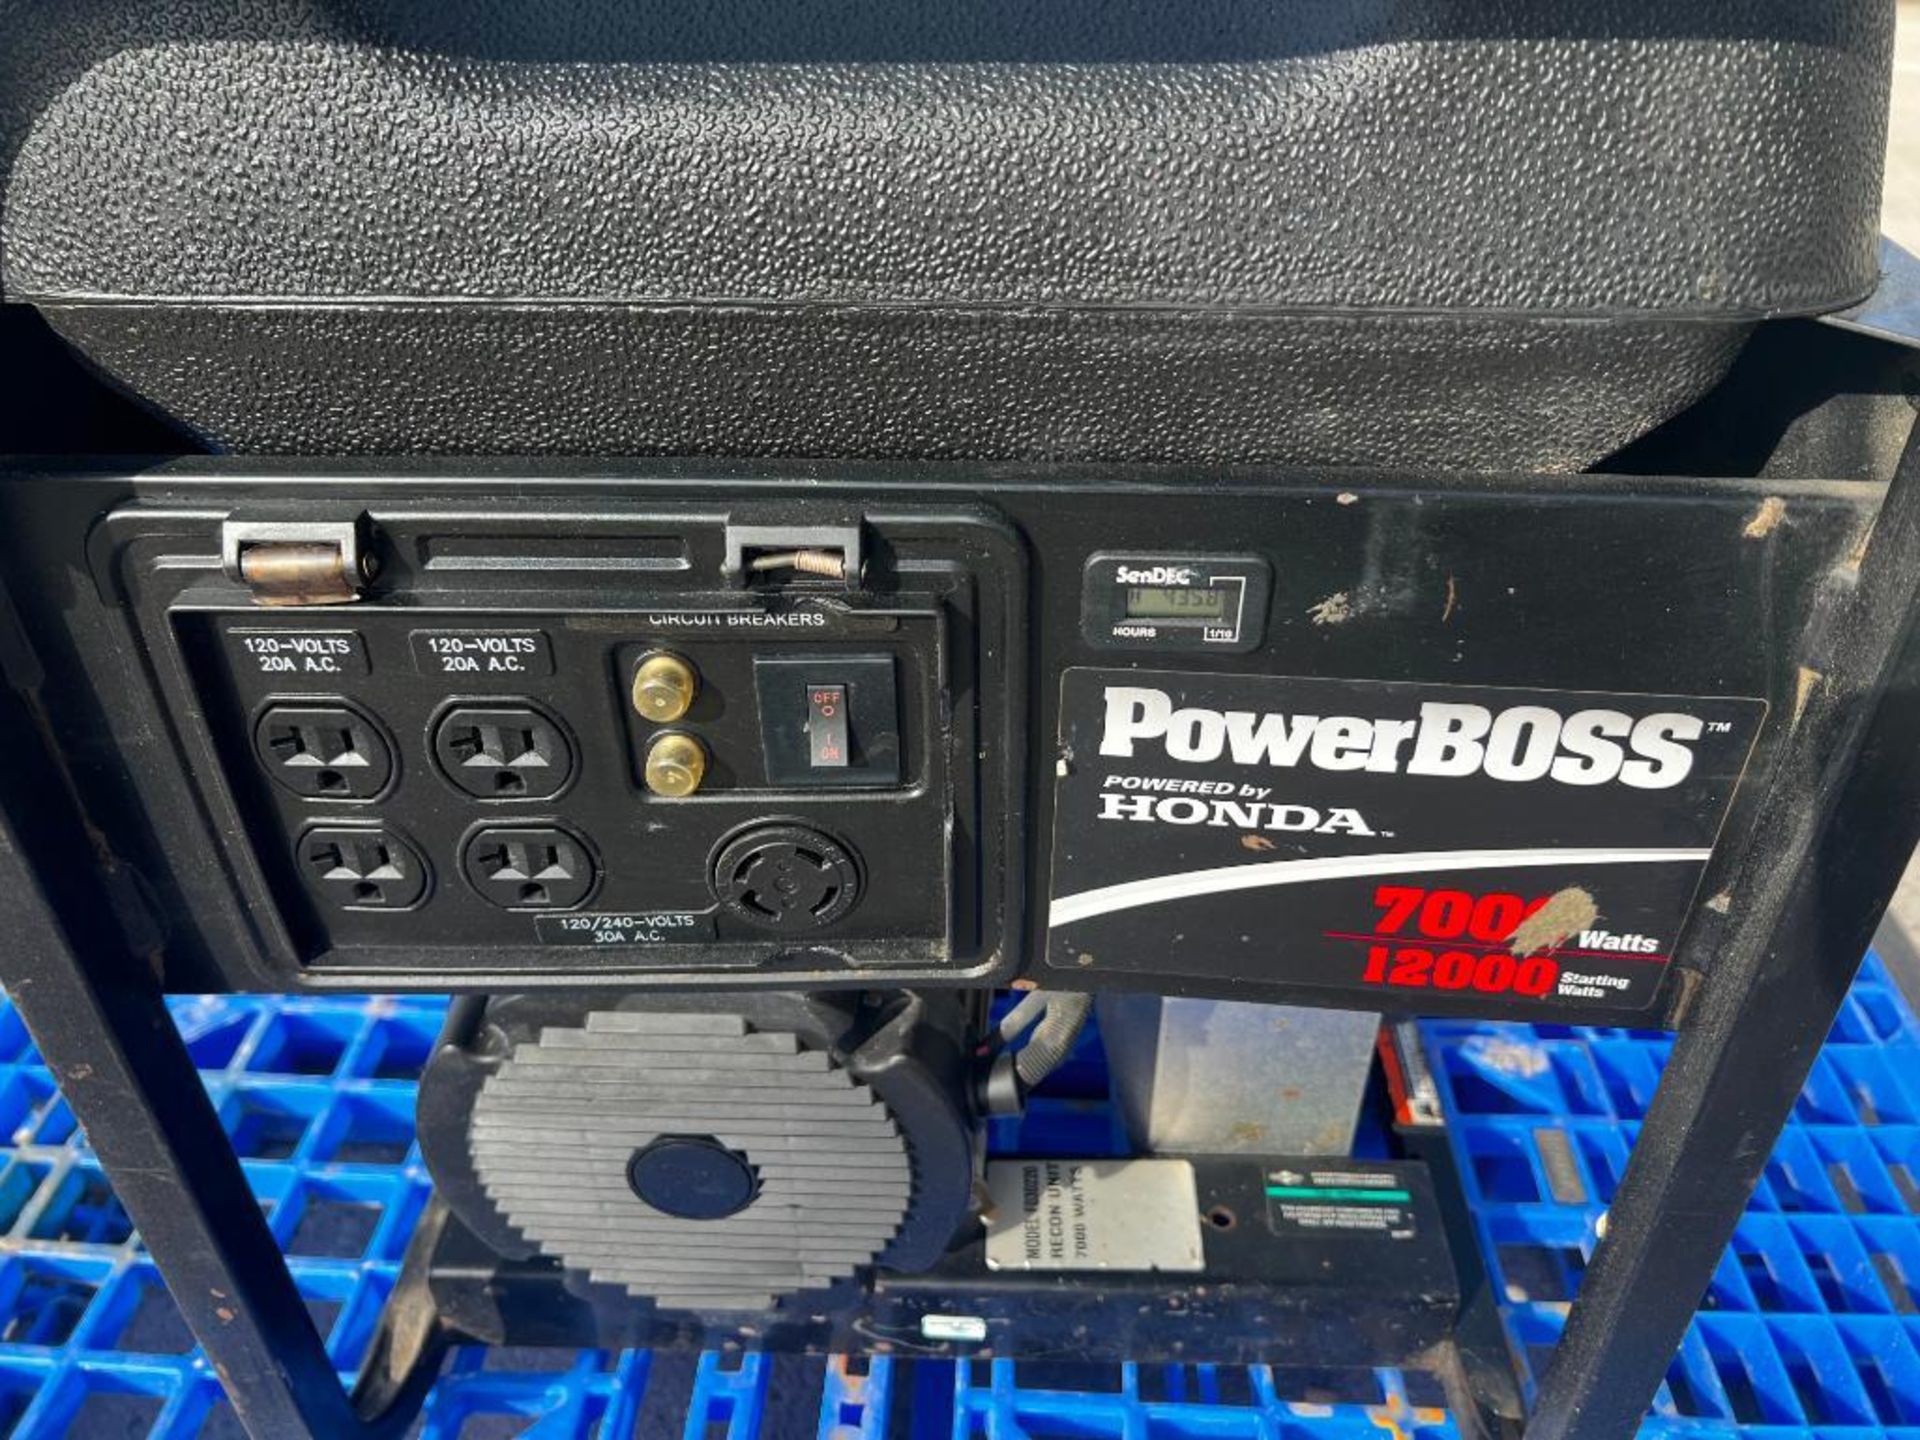 PowerBOSS Generator - Image 4 of 4